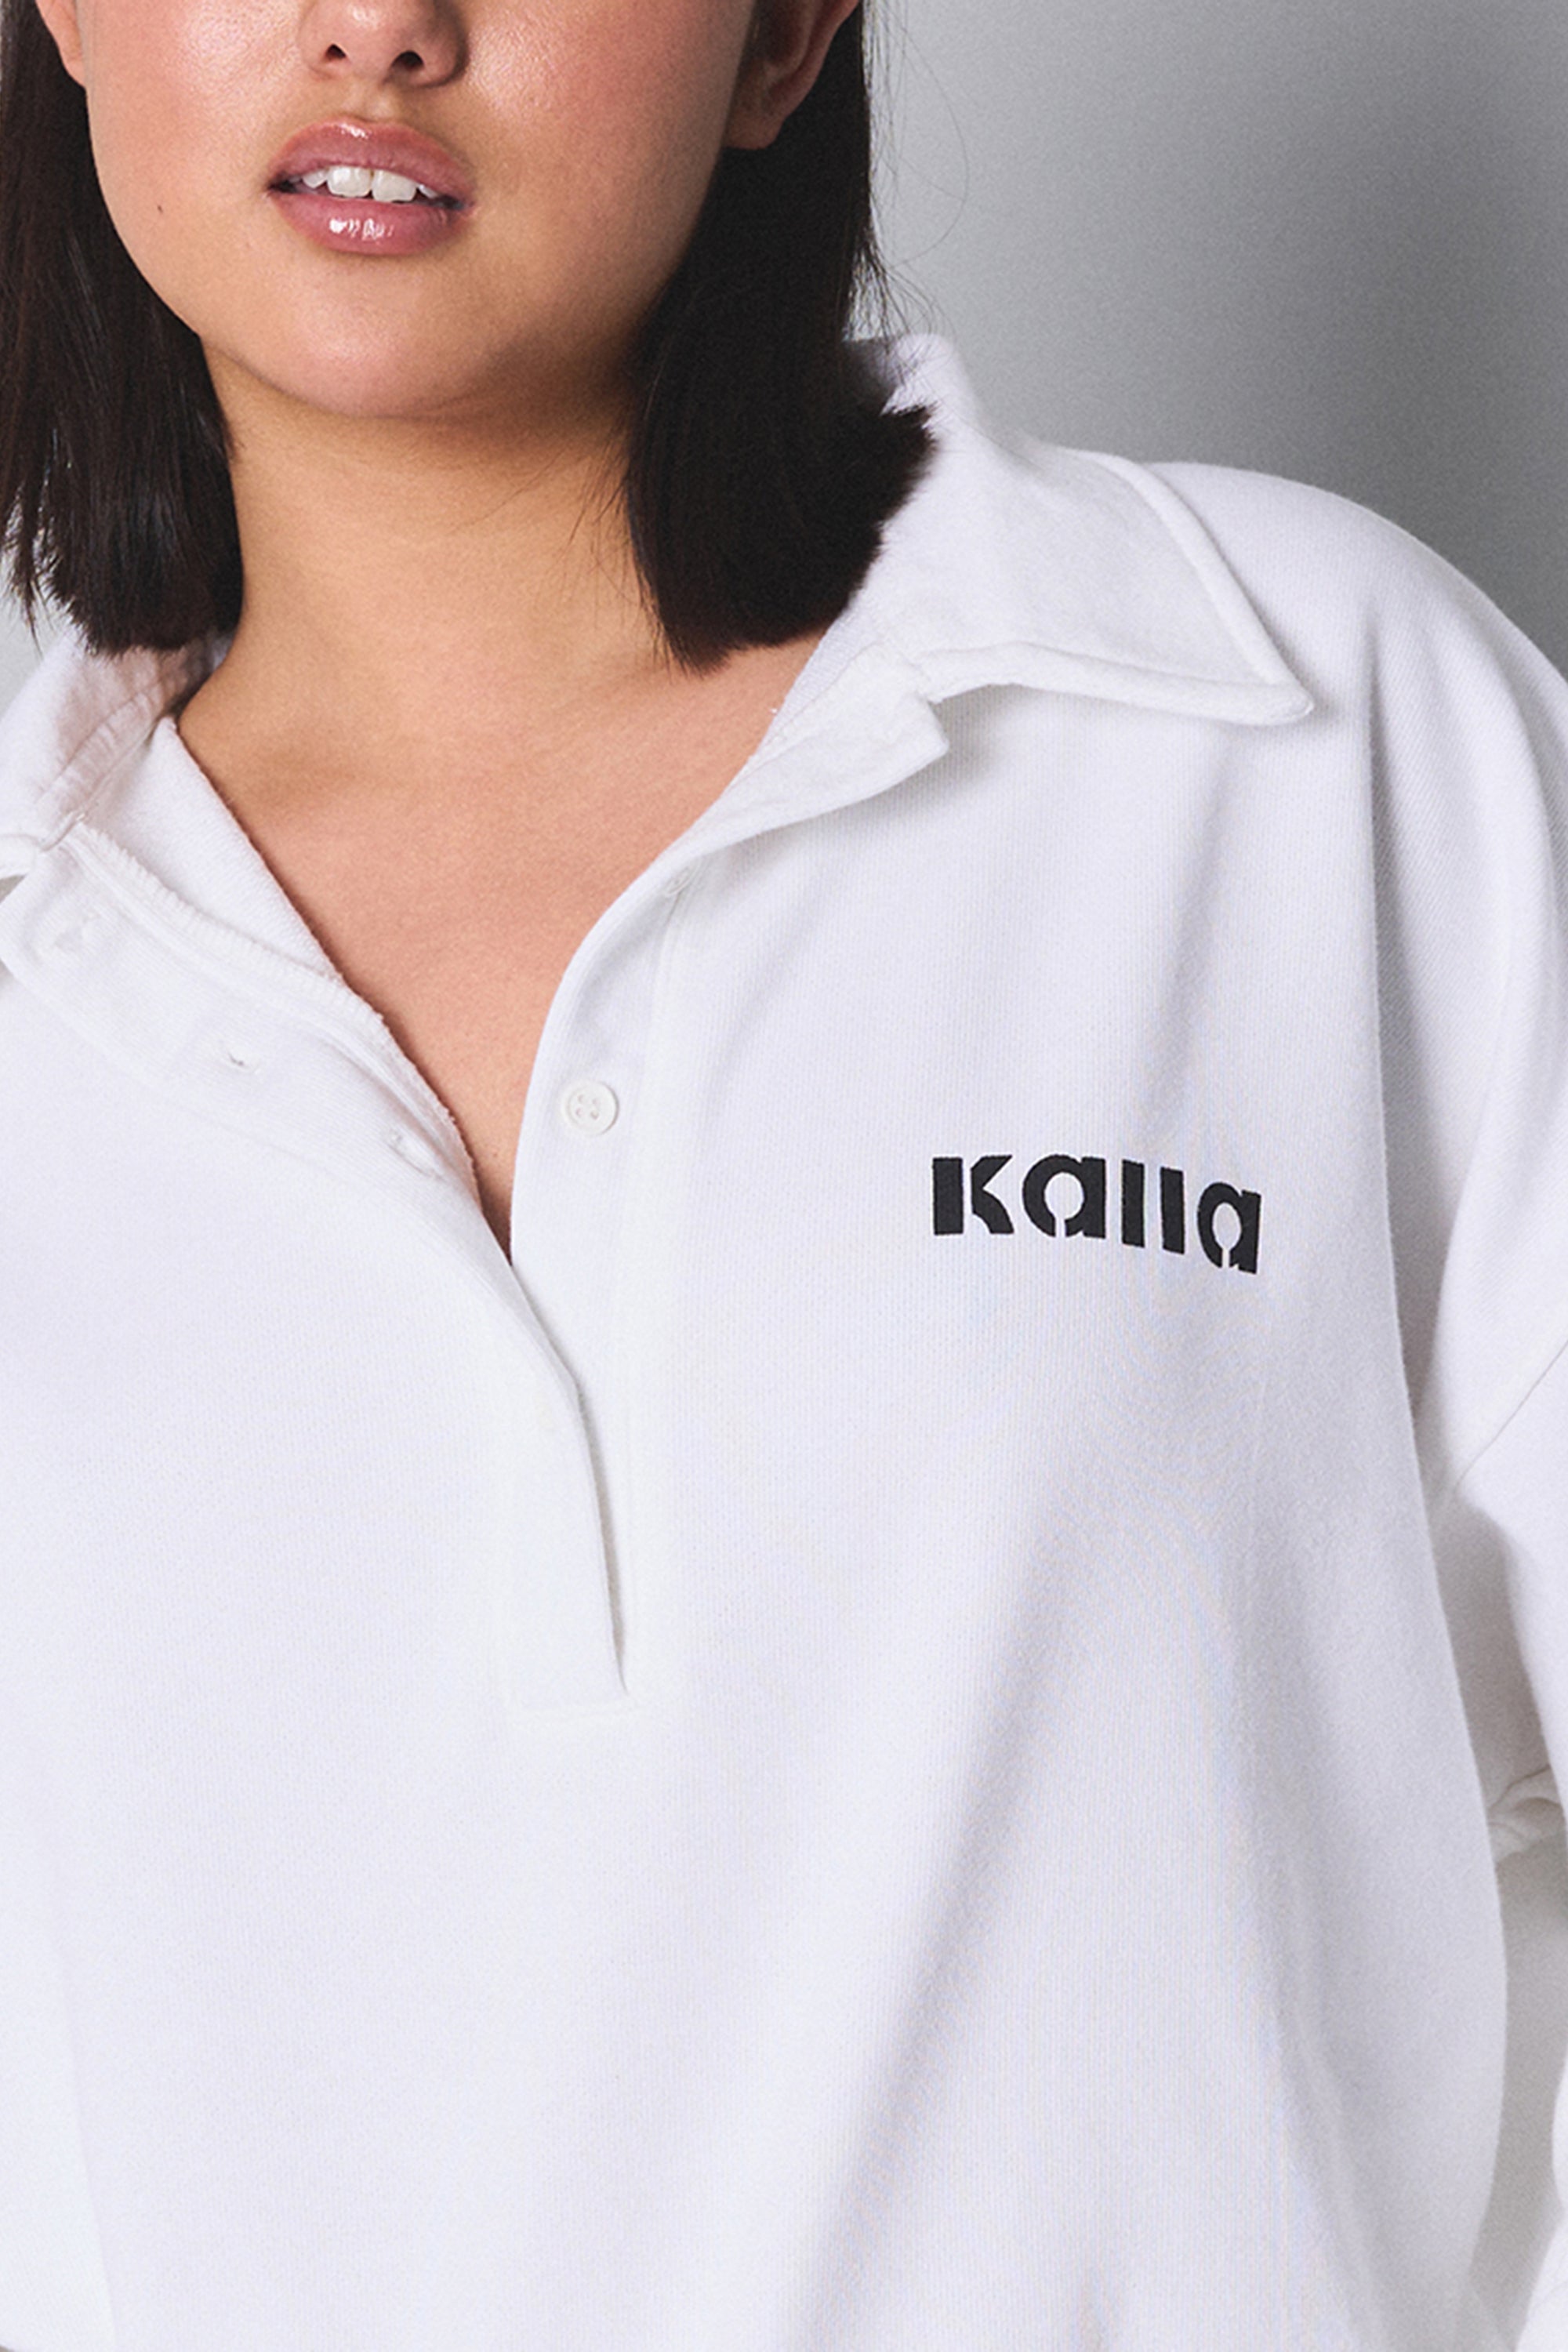 Kaiia Rugby style Button Up Sweatshirt White